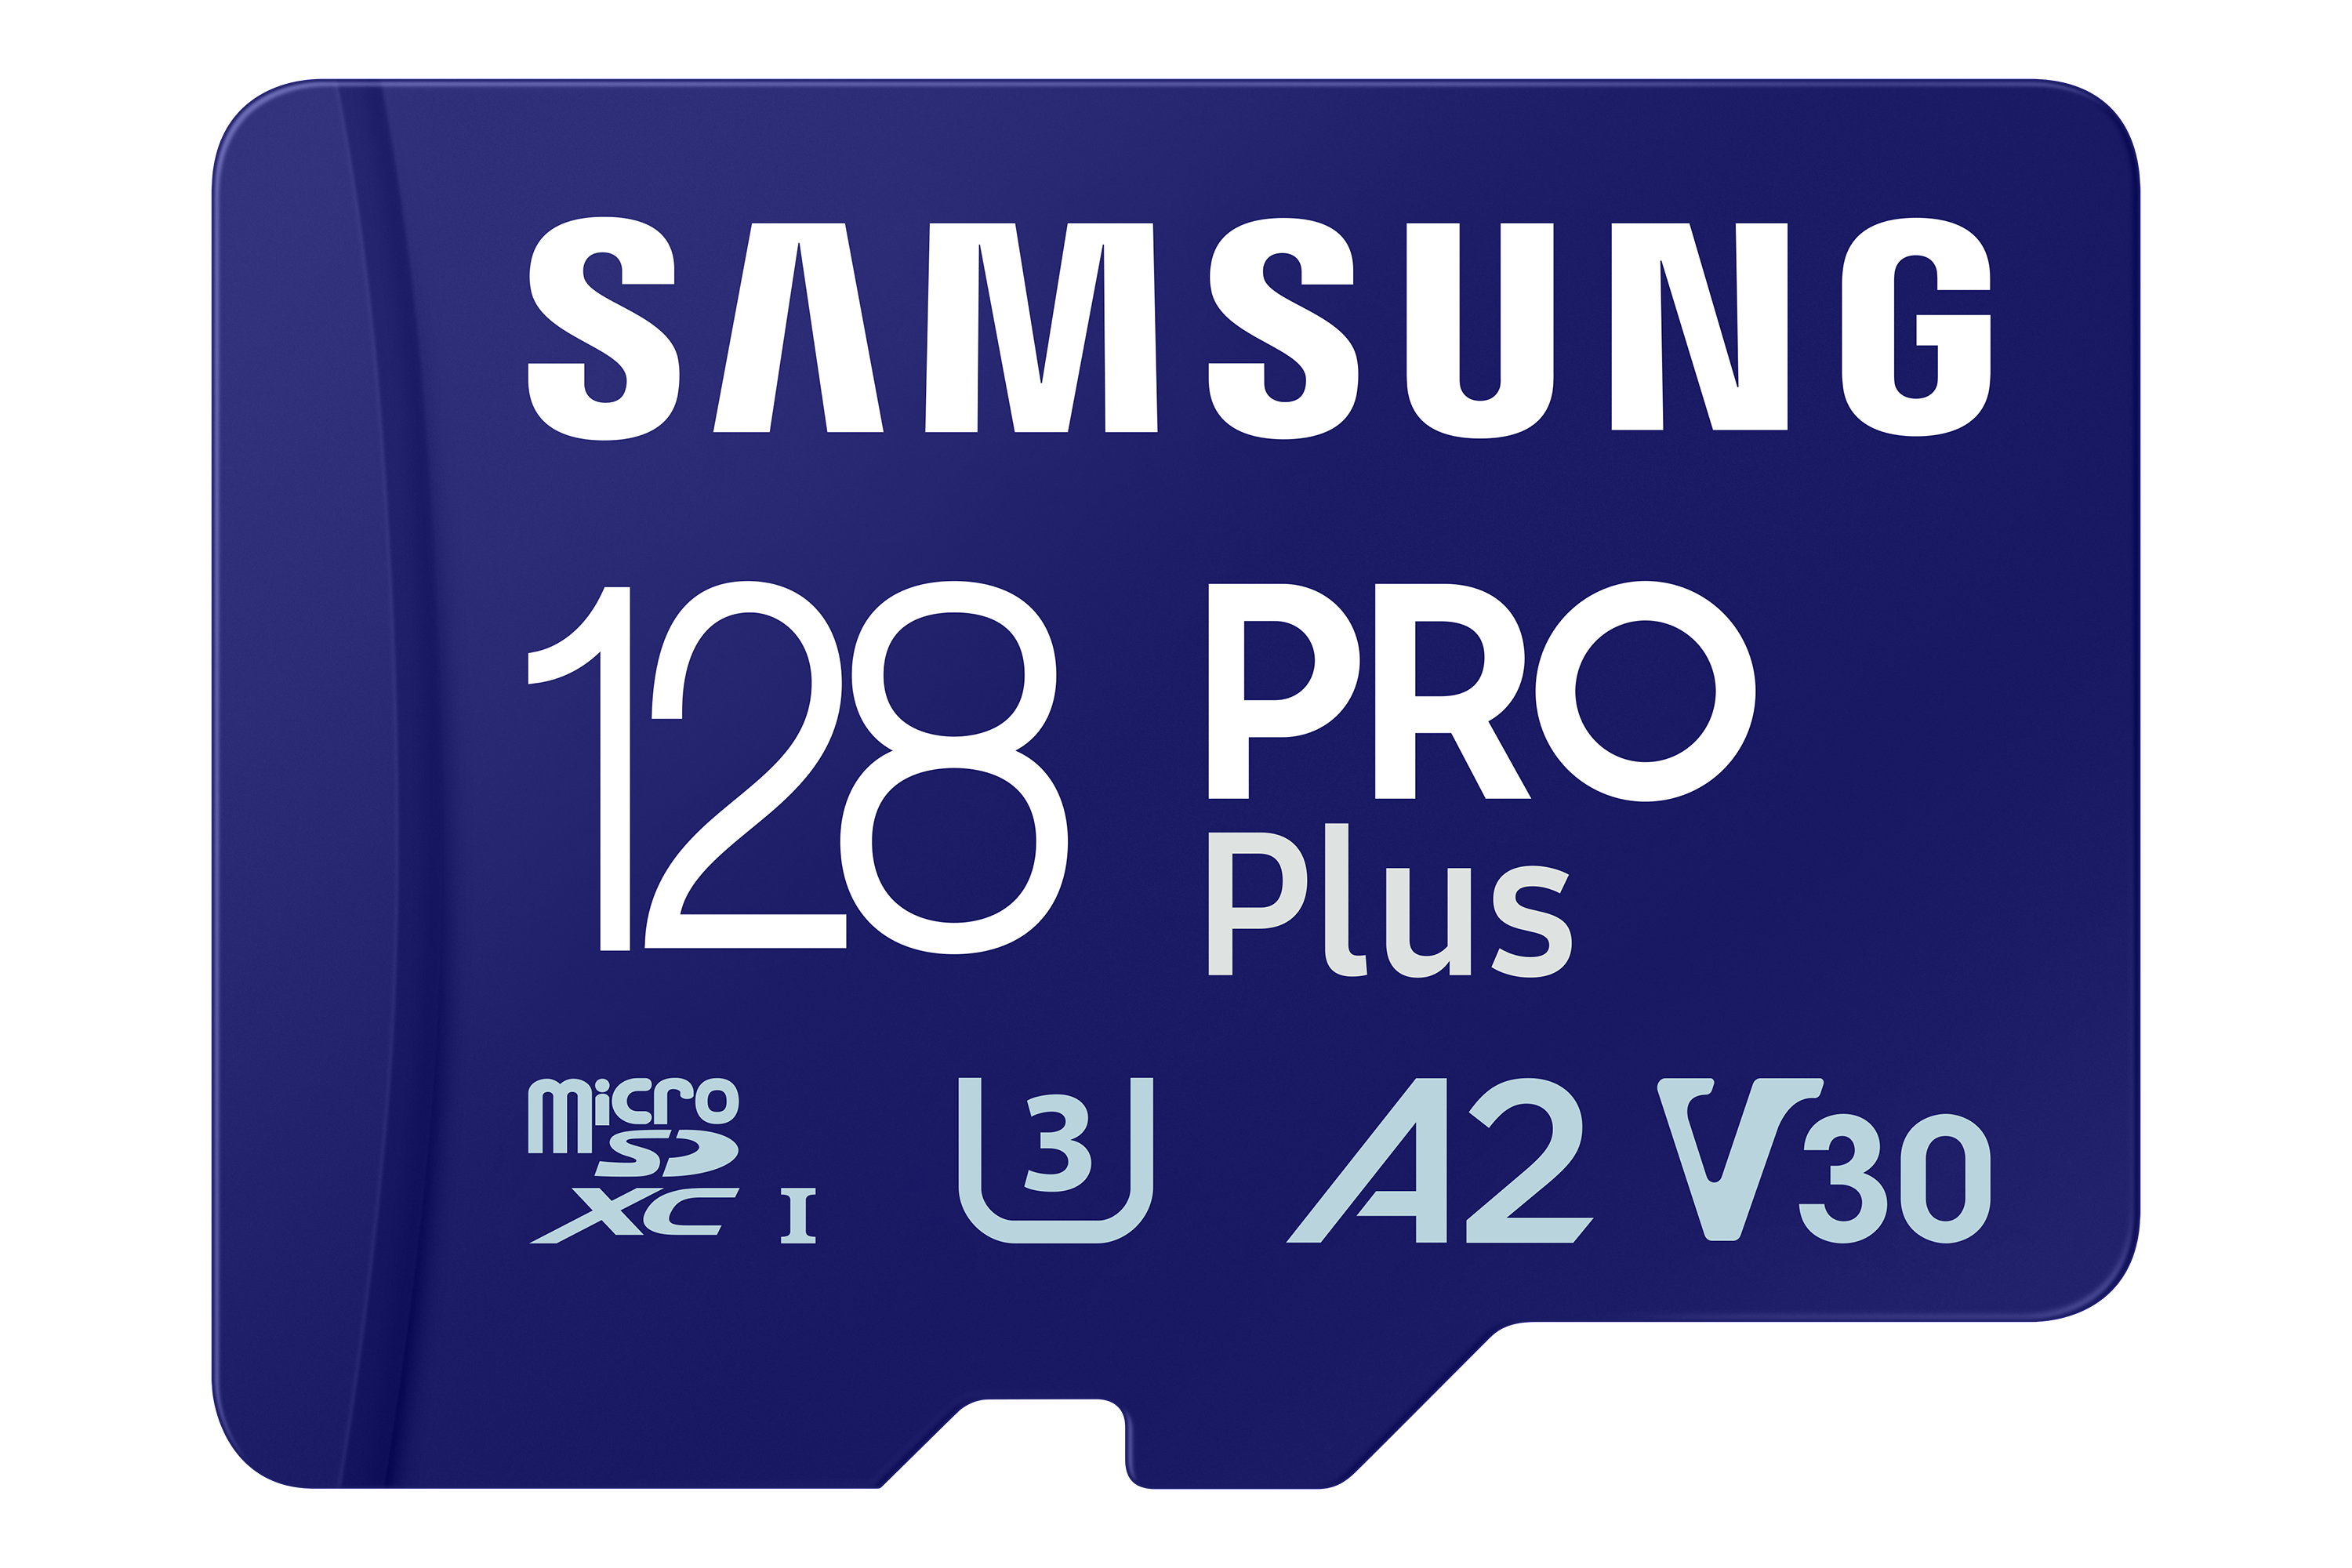 SAMSUNG SD-Adapter, mit MB/s Plus Speicherkarte, 128 GB, 180 PRO (2023) Micro-SDXC